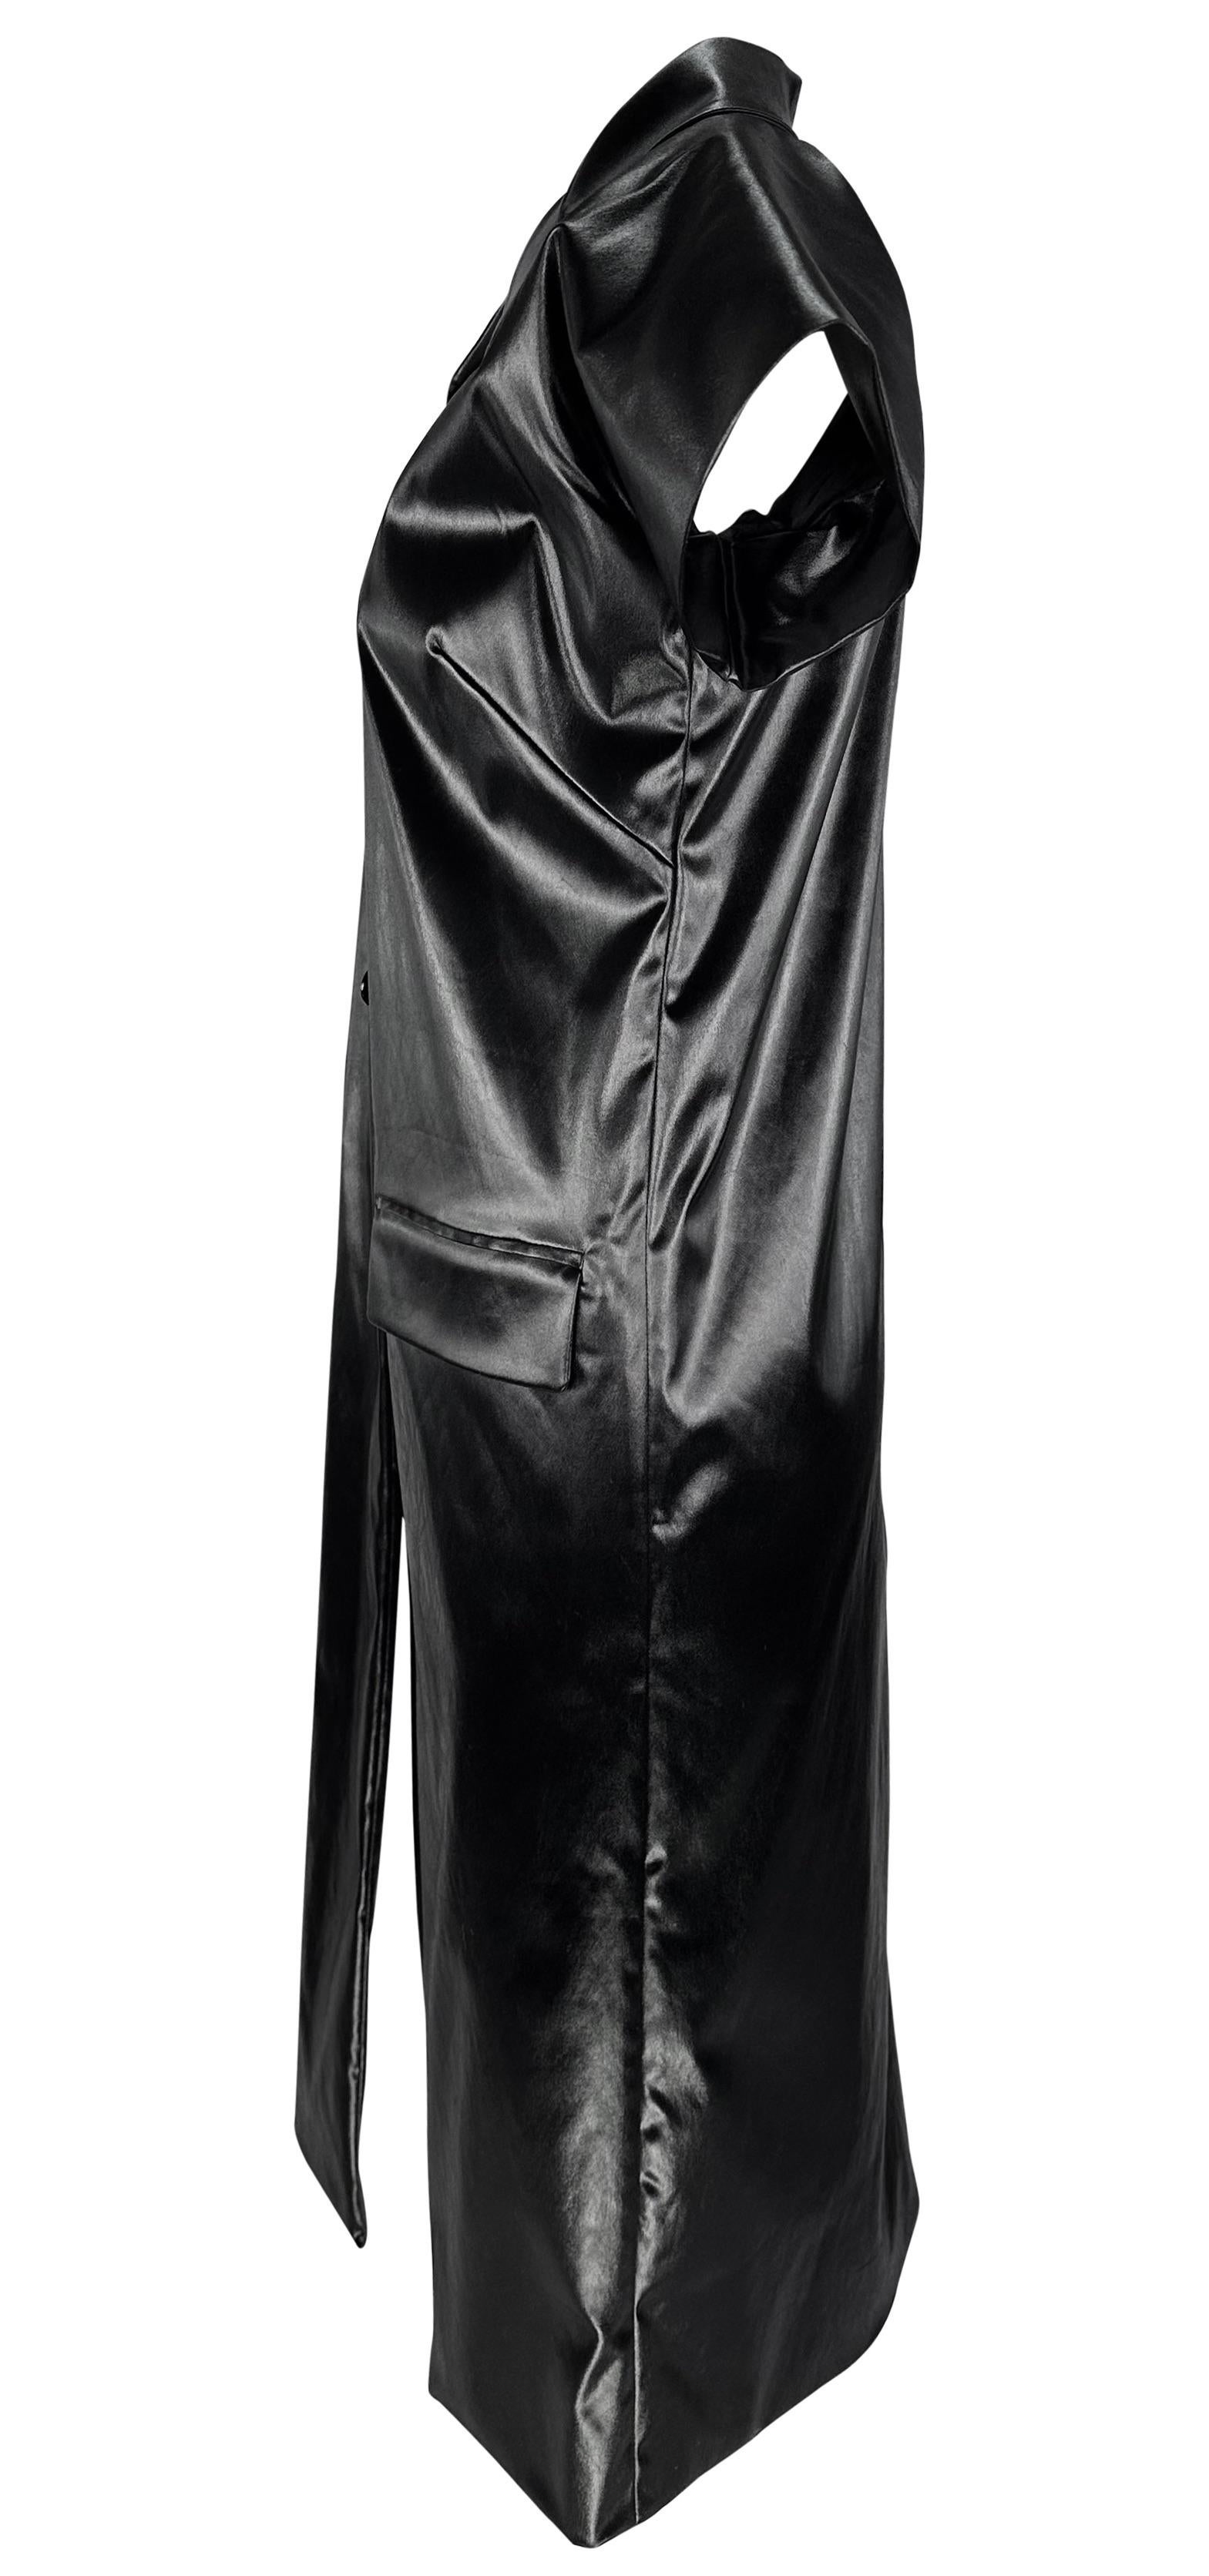 S/S 1999 Dolce & Gabbana Runway Wet Look Stretch Black Coat Dress Short Sleeve For Sale 1